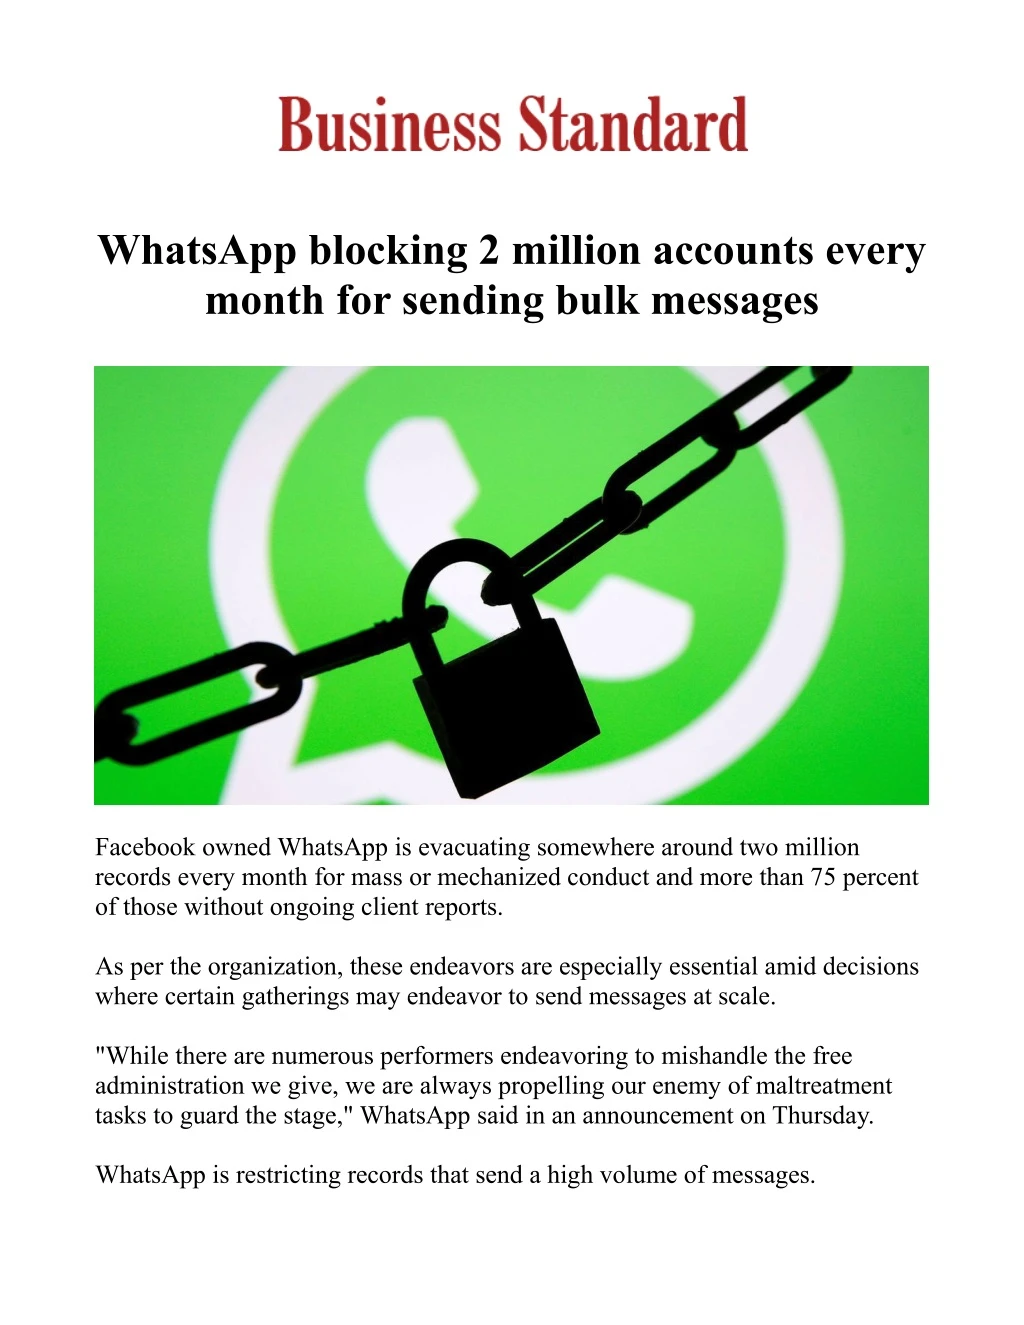 whatsapp blocking 2 million accounts every month